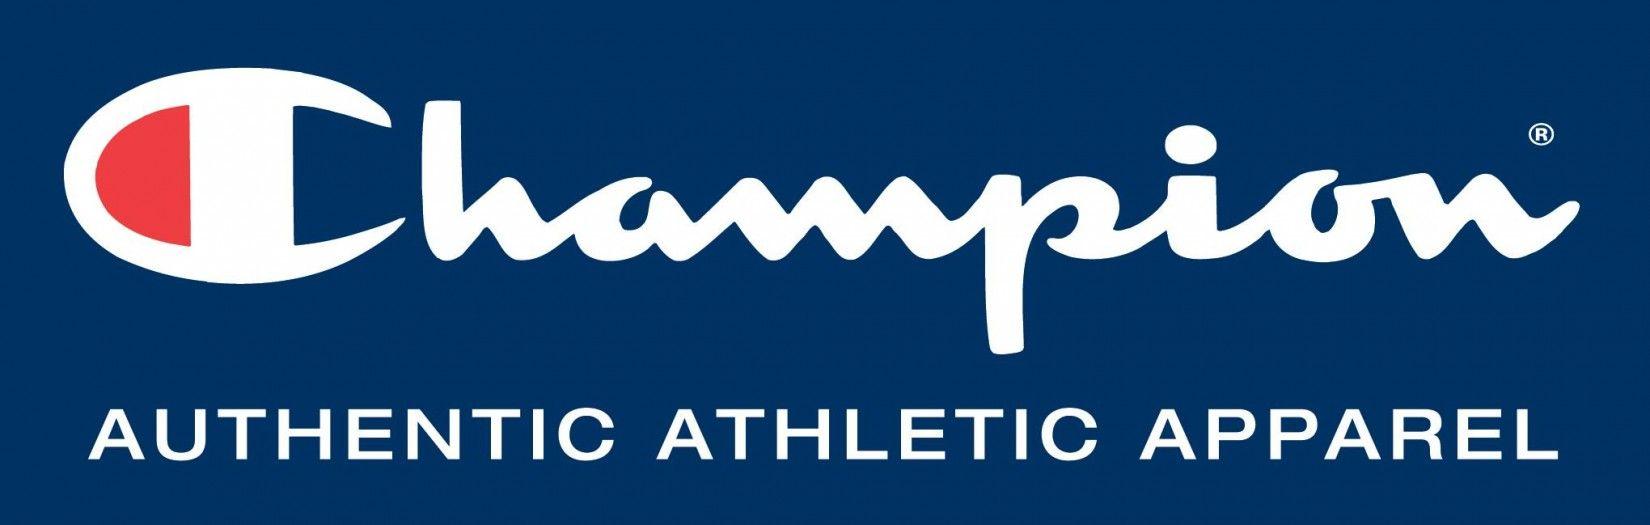 Champion Apparel Logo - Champion USA font